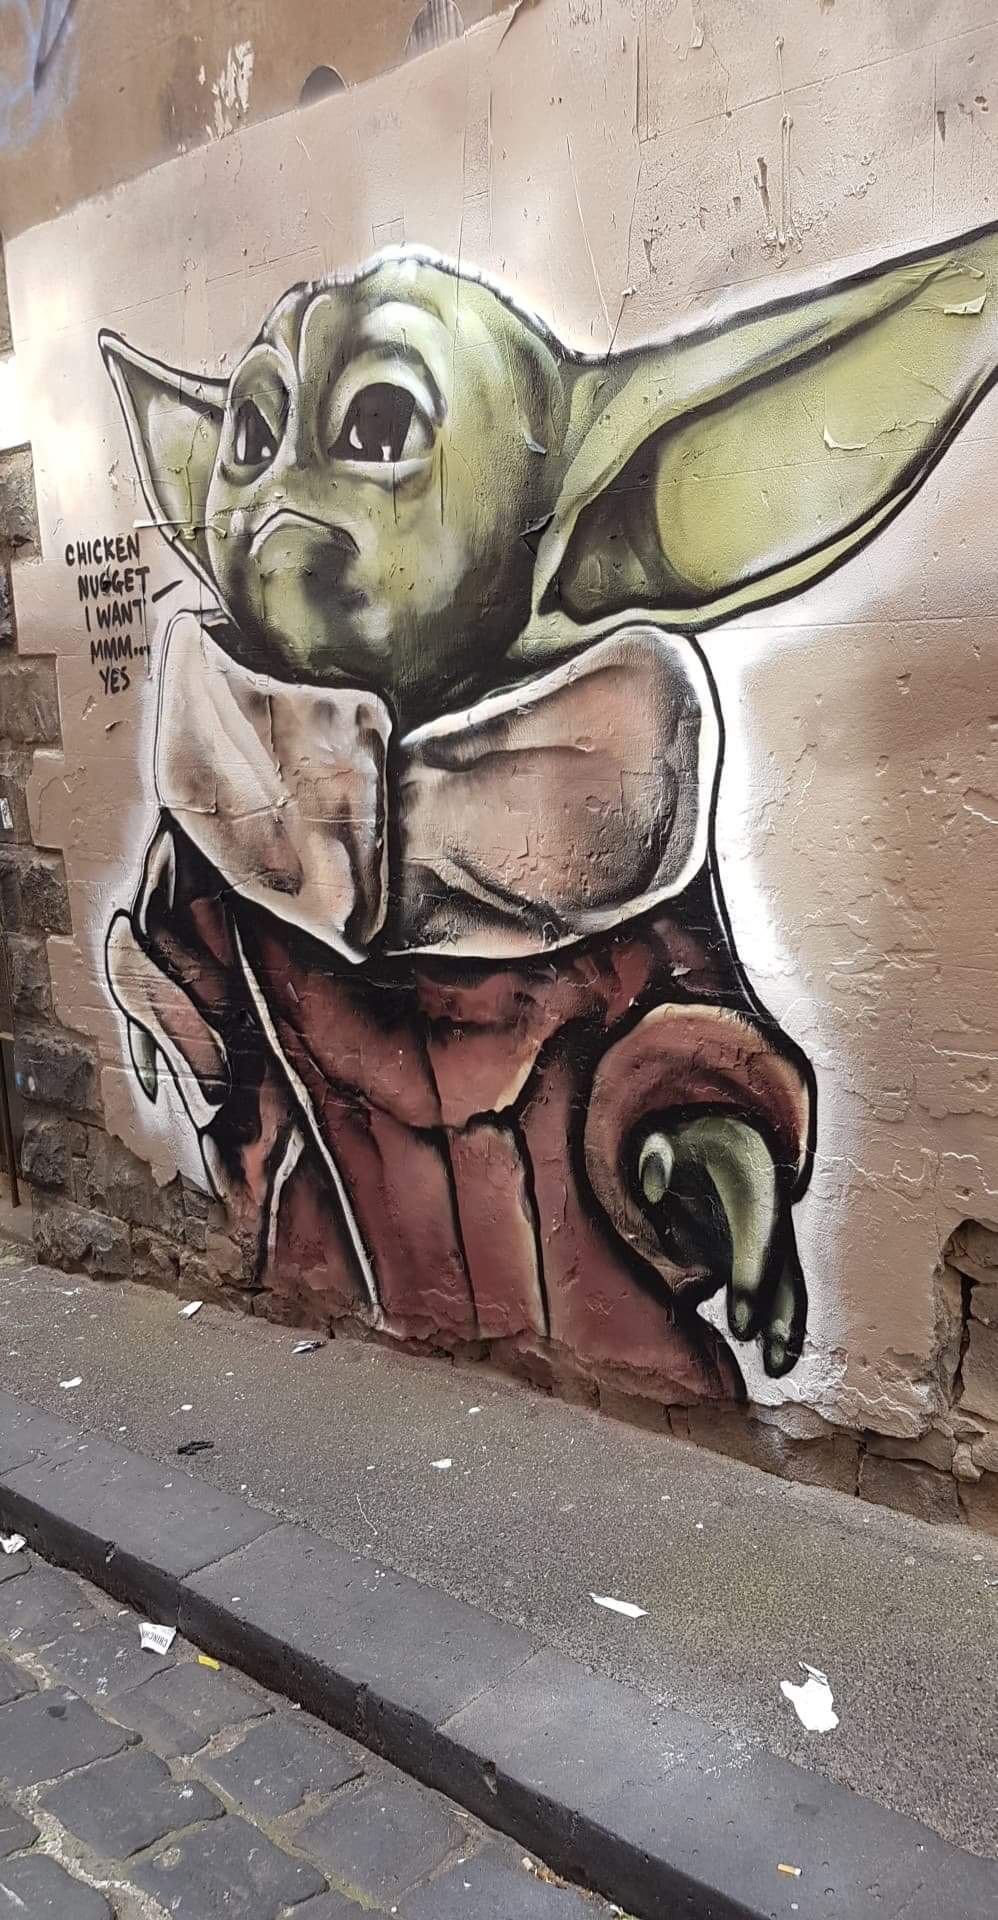 Baby Yoda graffiti done by LushSux.